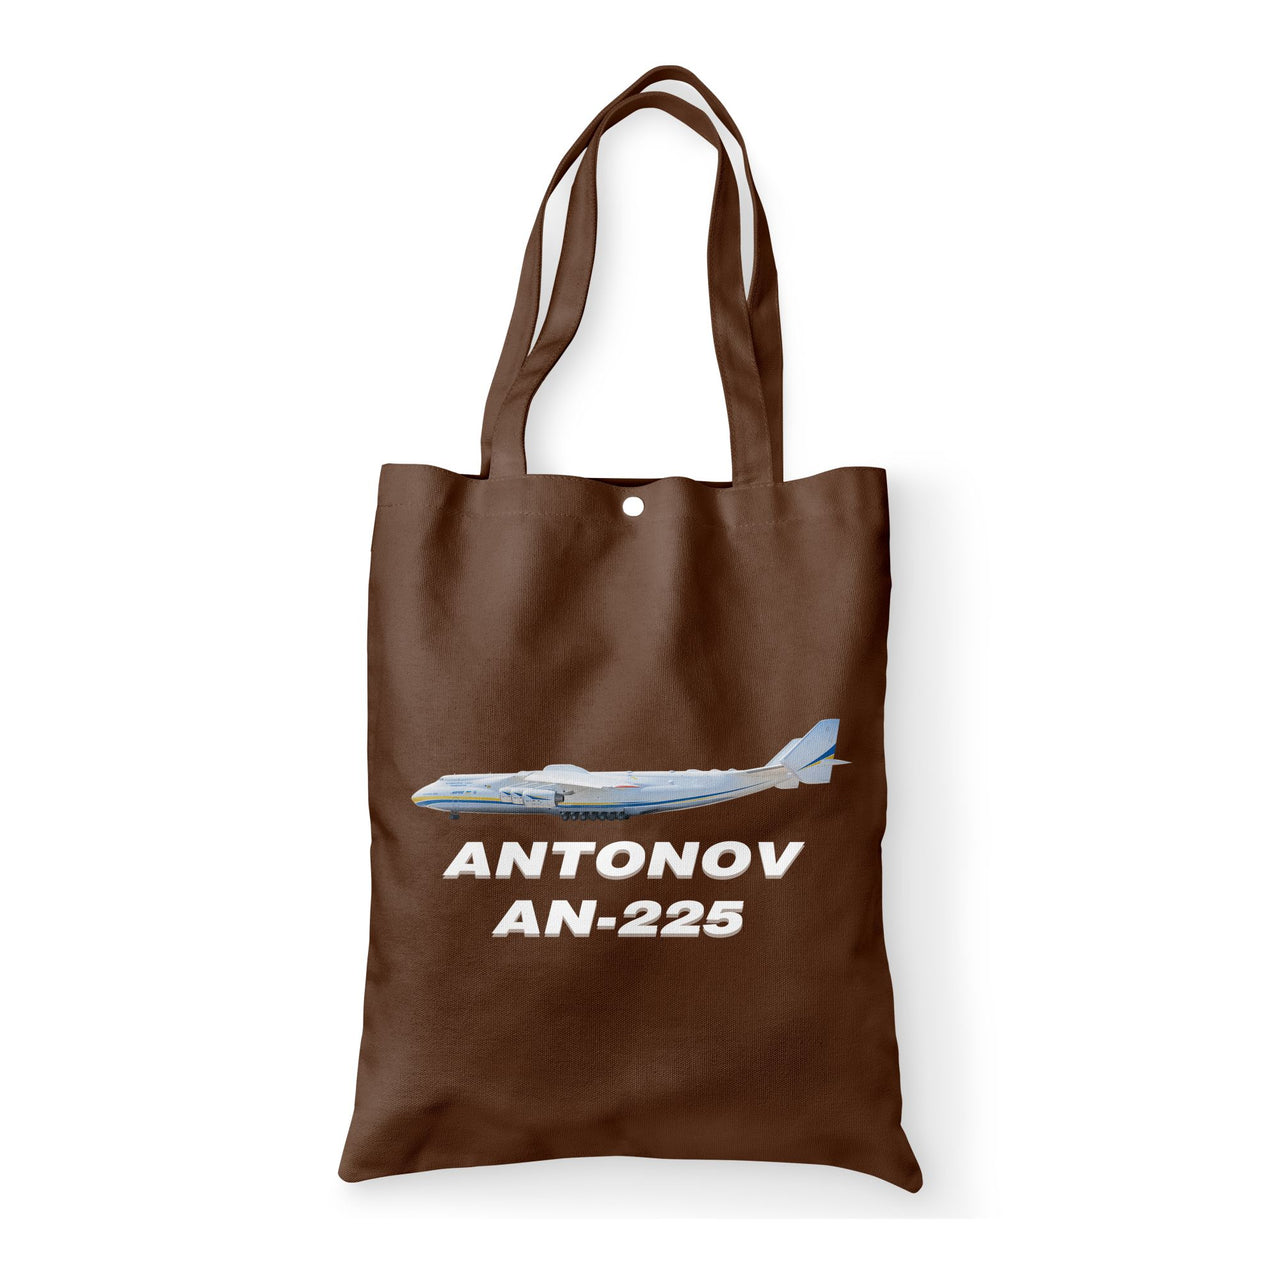 The Antonov AN-225 Designed Tote Bags